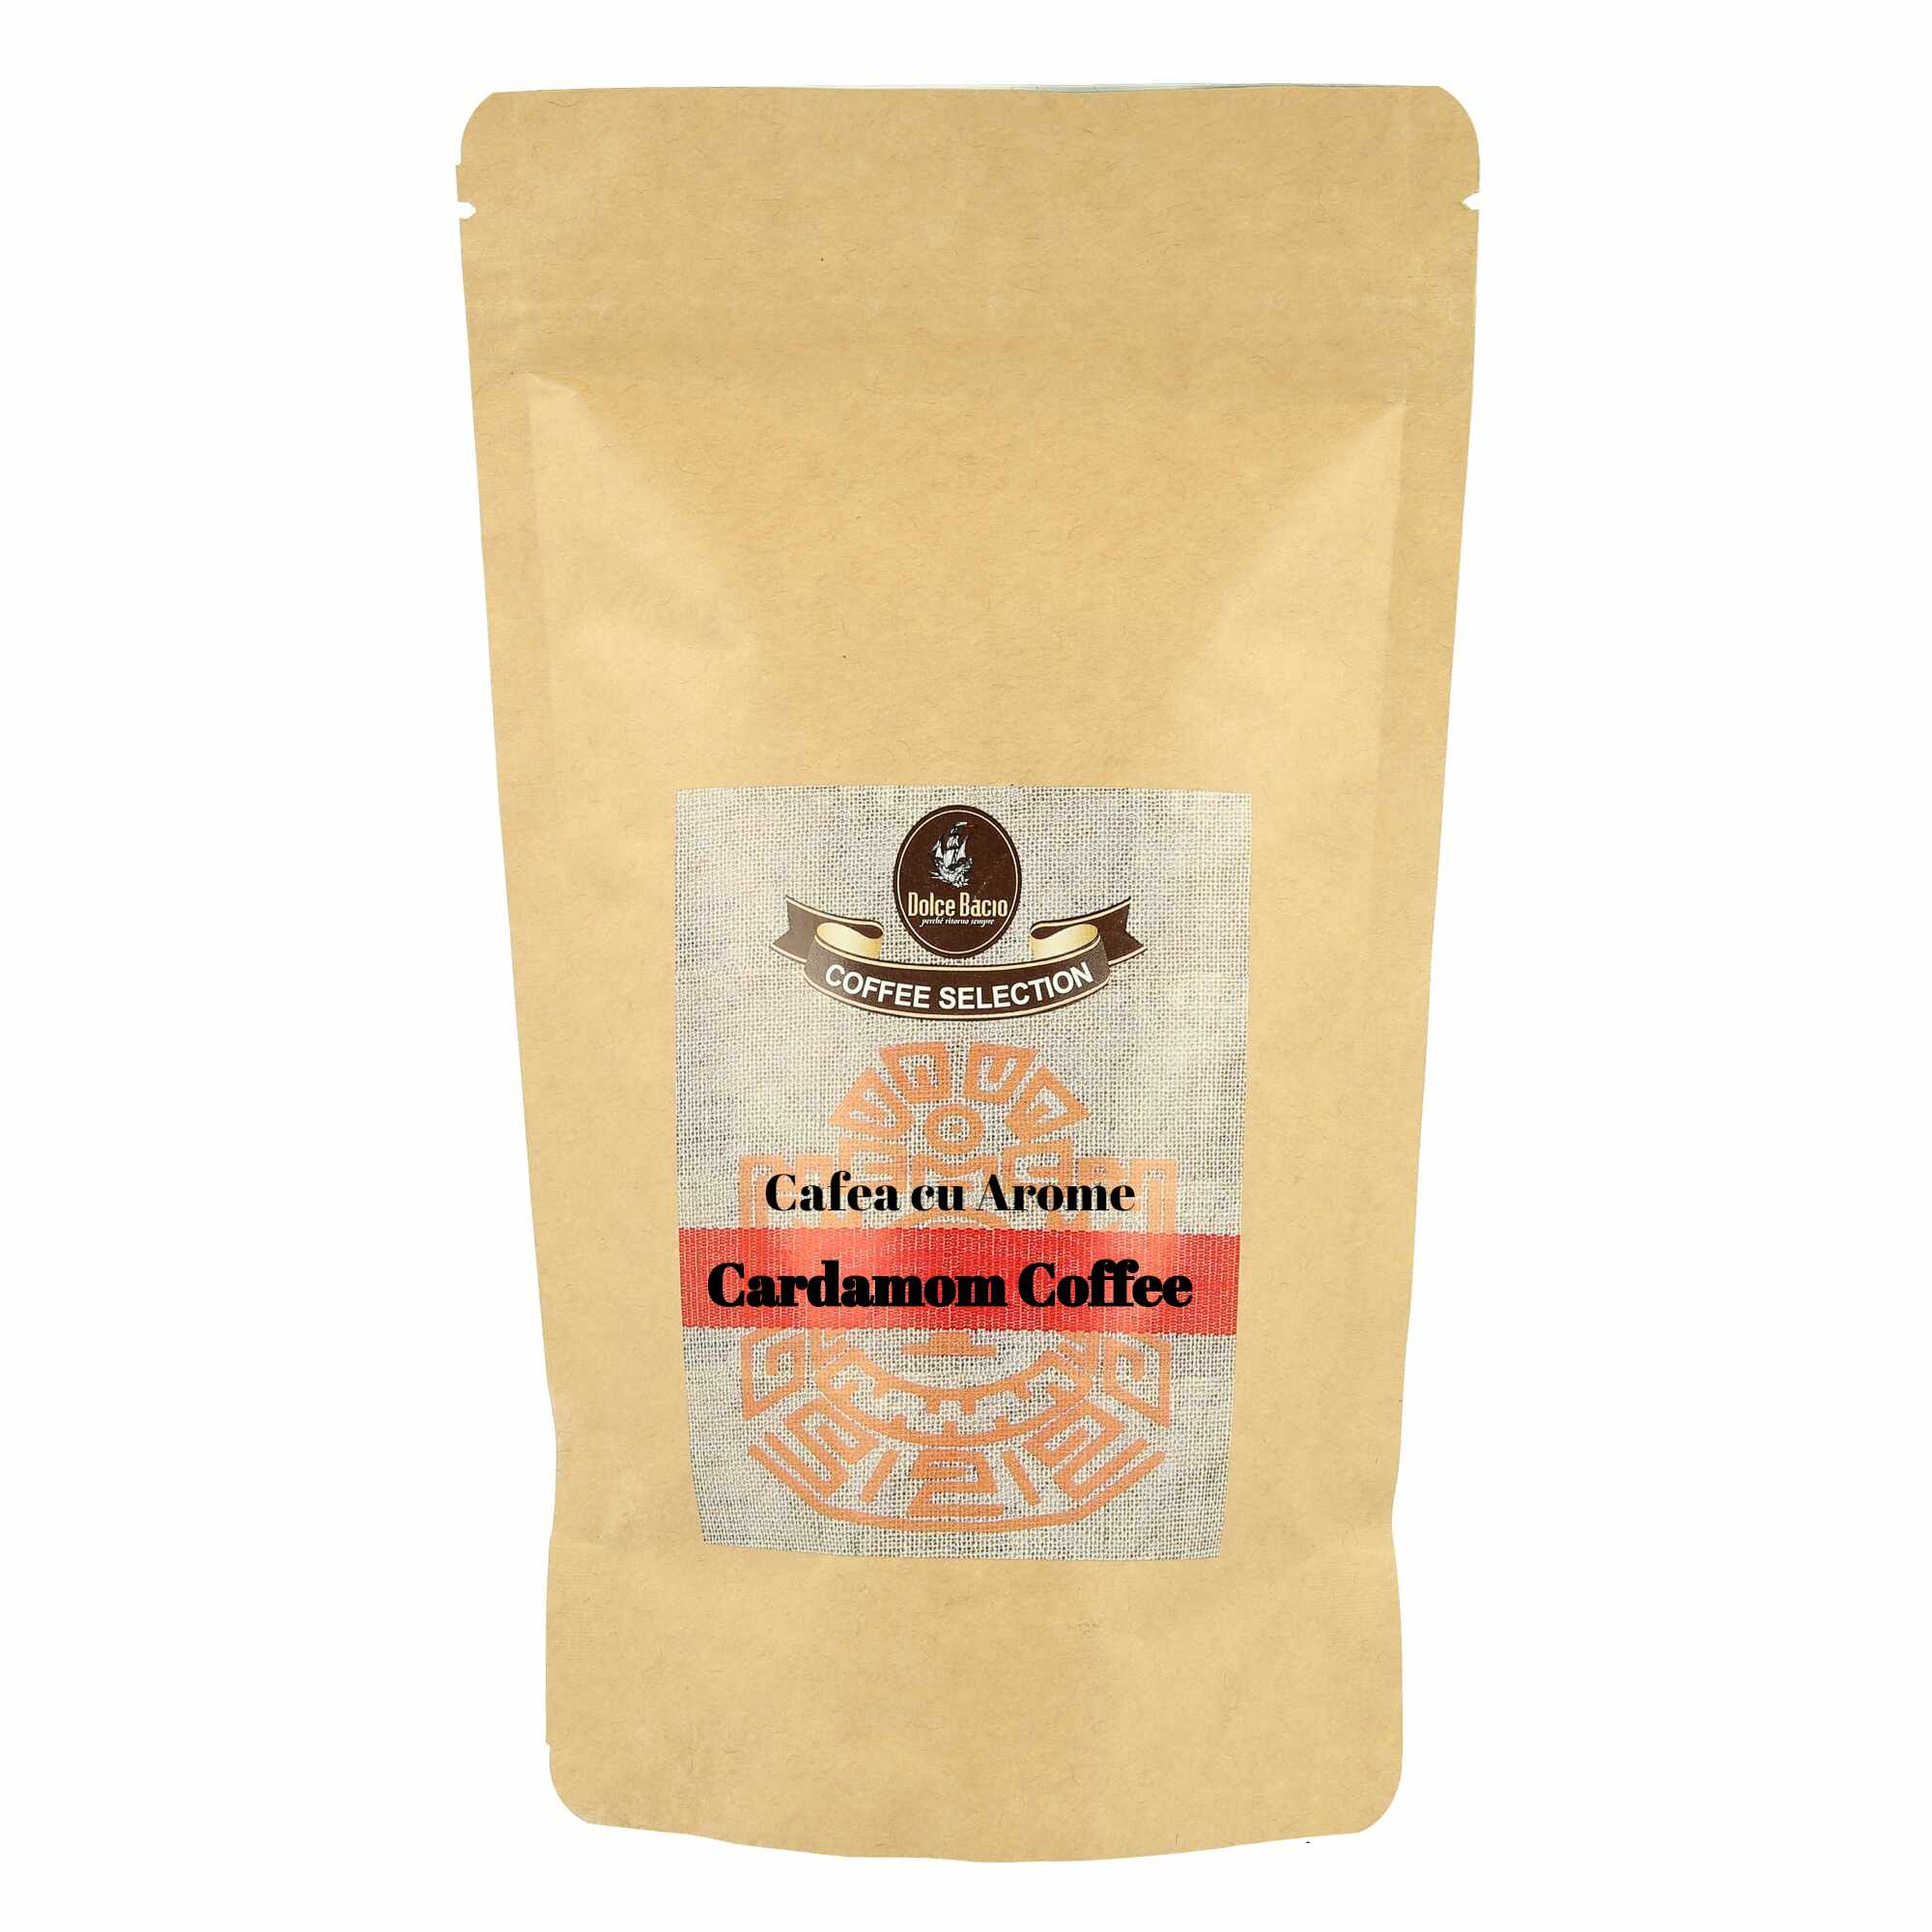 Cardamom Coffee 200g french press